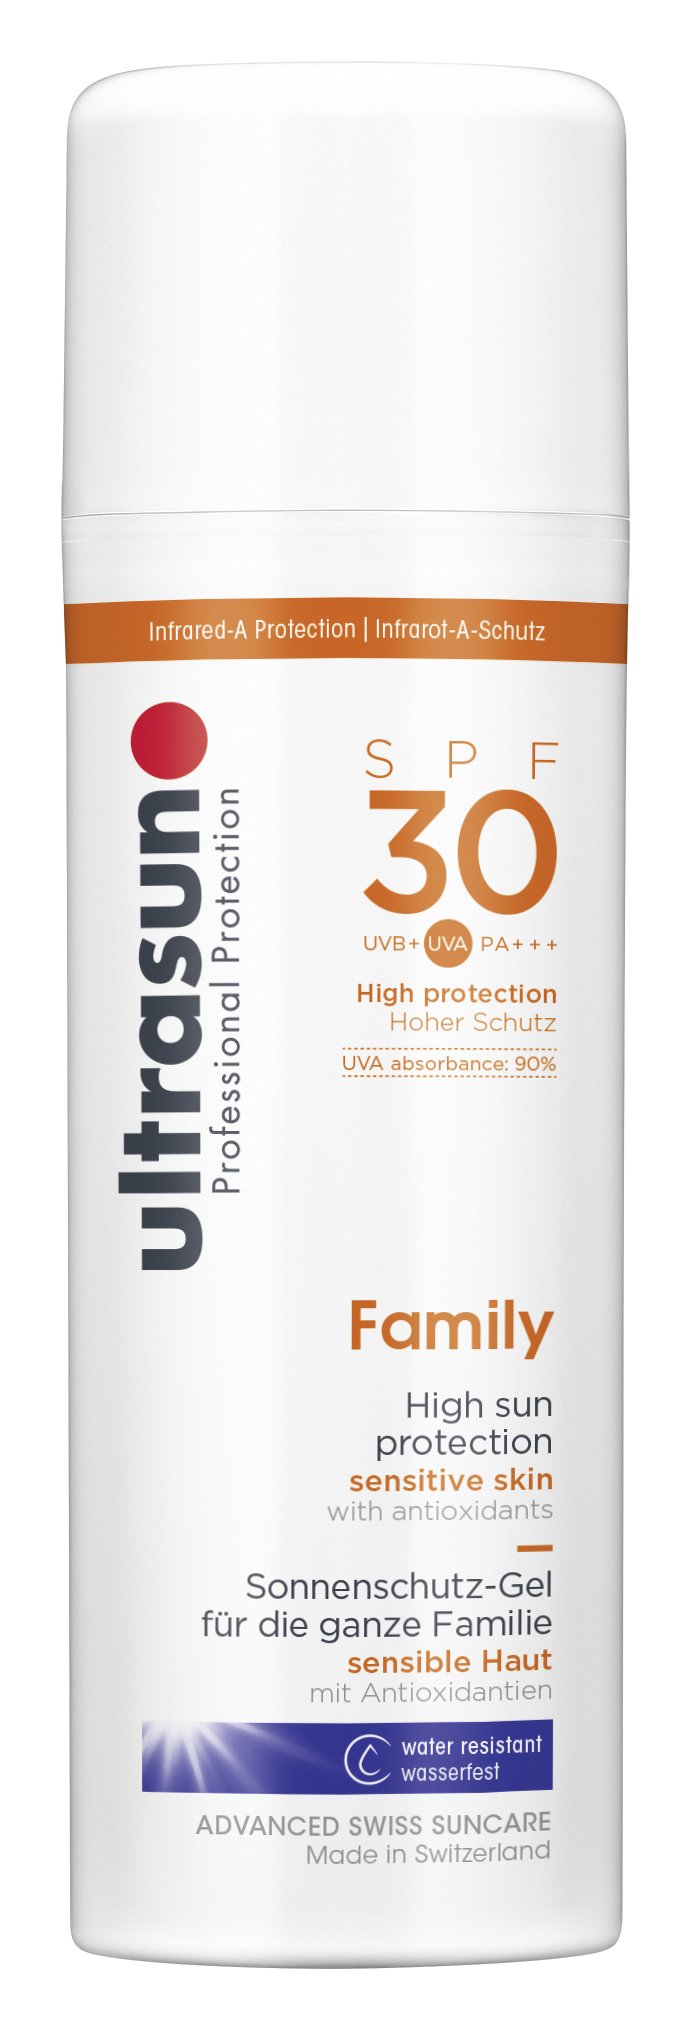 Ultrasun Family SPF30, 150 ml